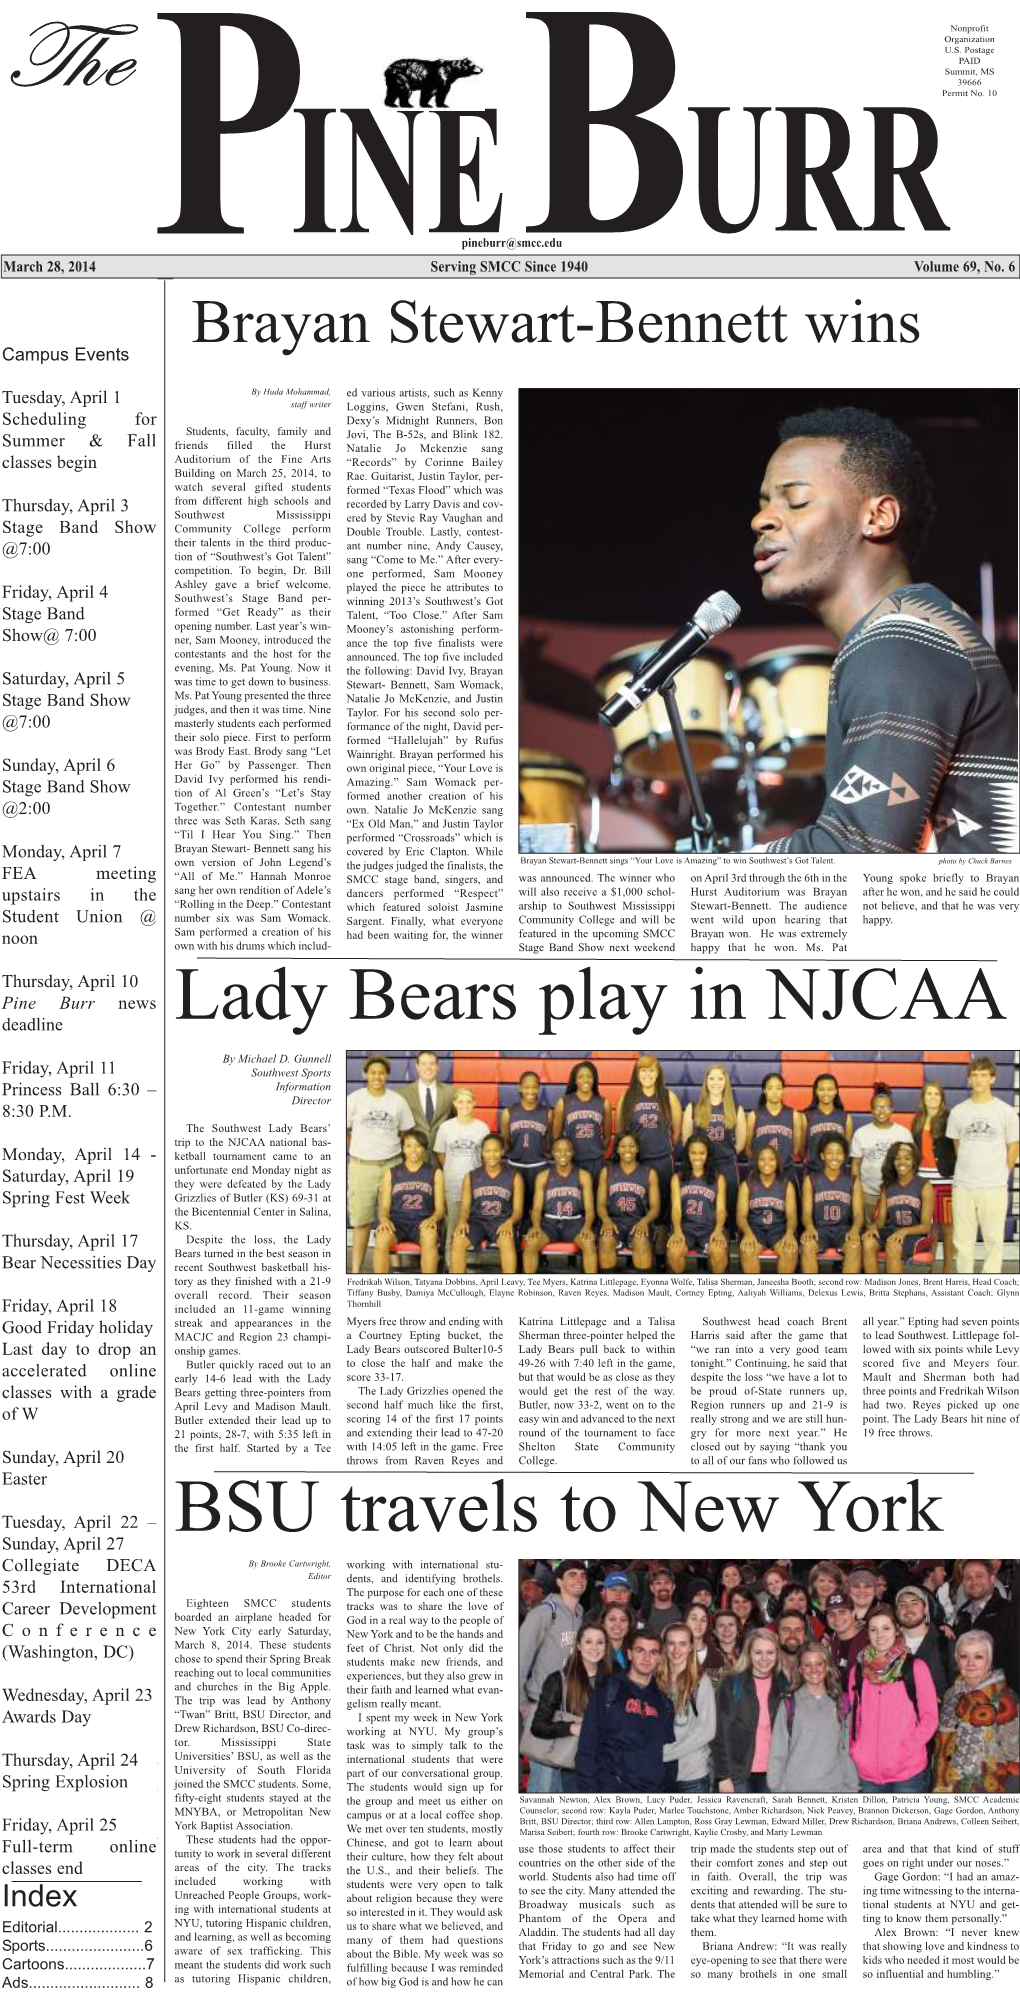 Lady Bears Play in NJCAA BSU Travels to New York